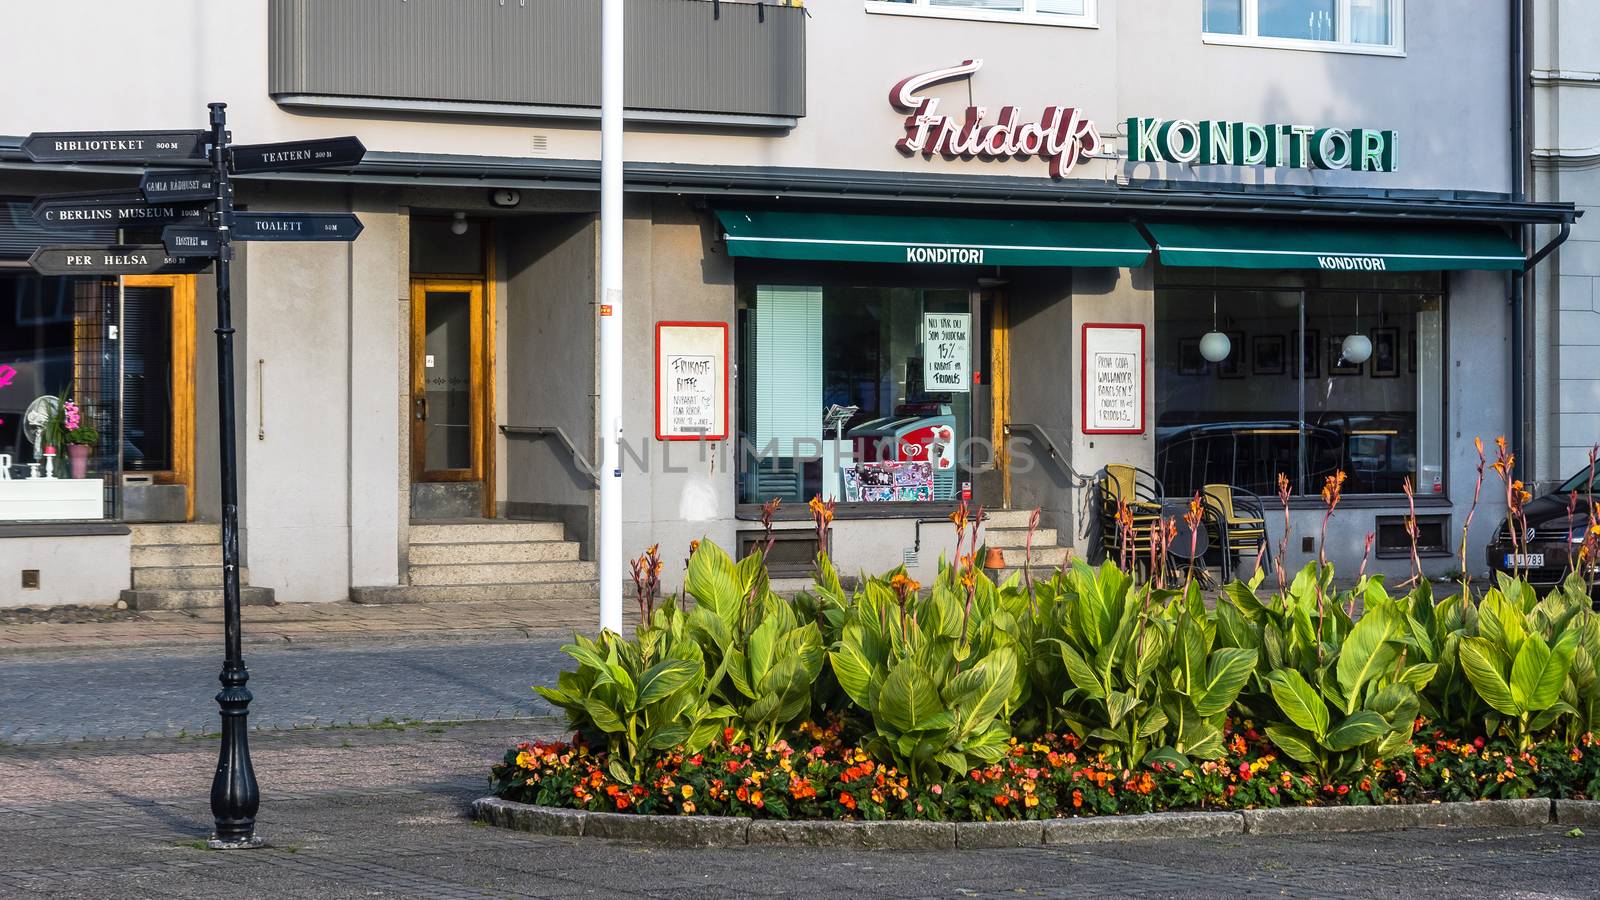 Legendary Fridolfs Konditori Café in Ystad featuring in the well-known series based on Henning Mankell's novels as a favorite café of fictitious hero, inspector Kurt Wallander.